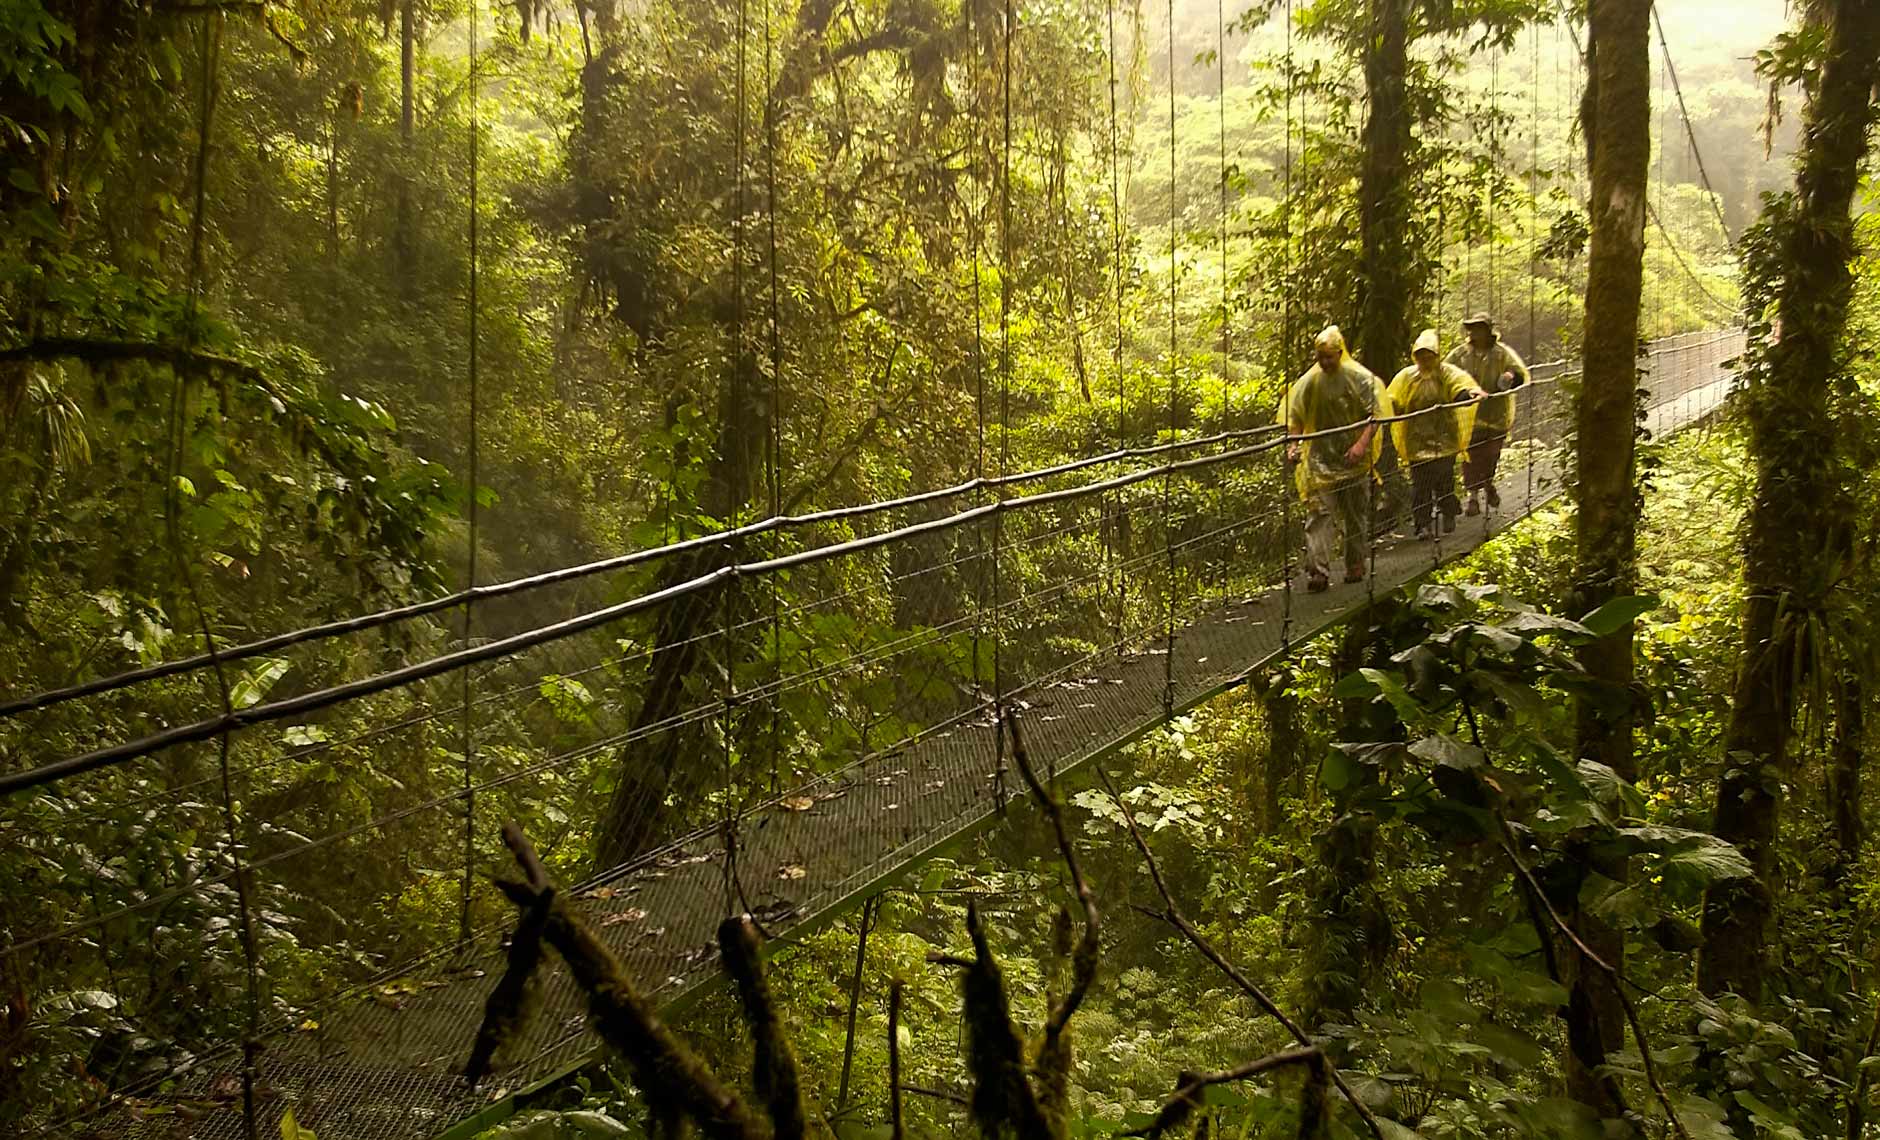 Rain Forest in Costa Rica